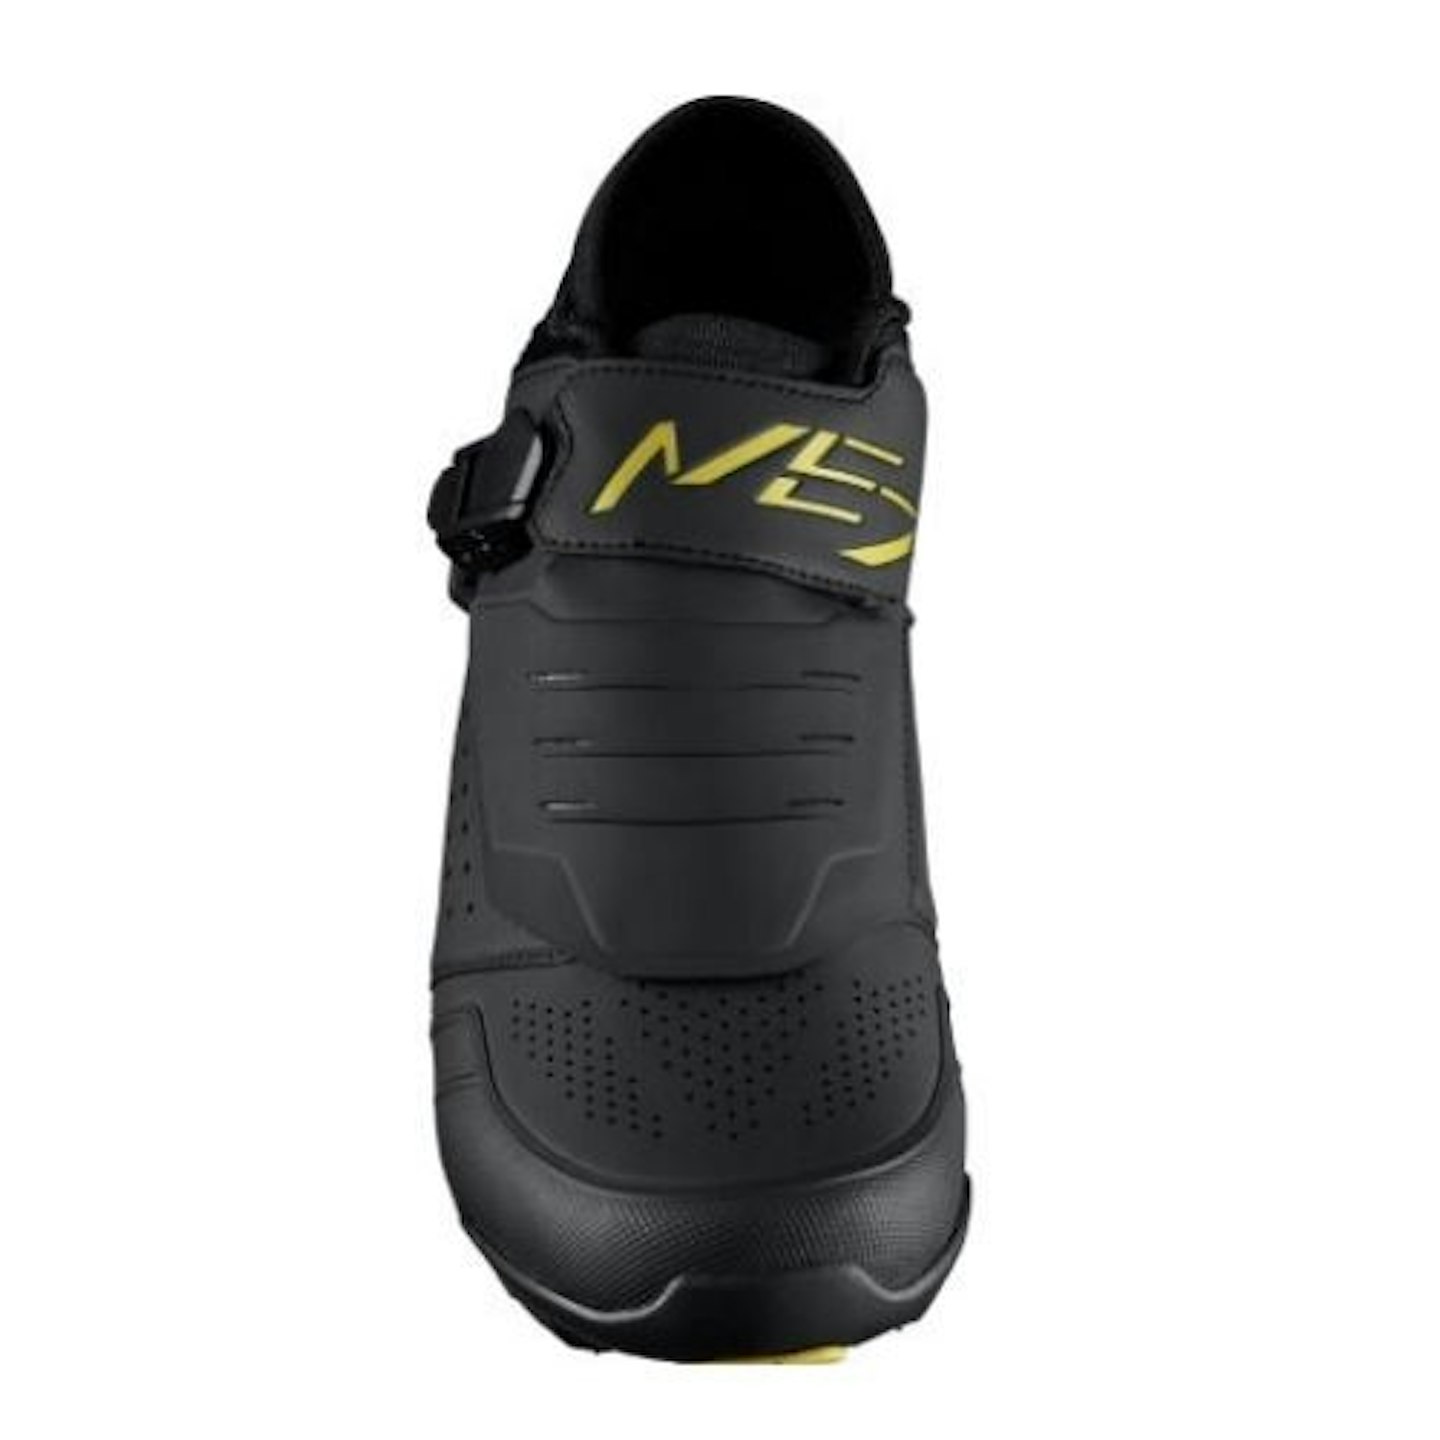 Shimano ME7 (ME701) SPD MTB Shoes in Black